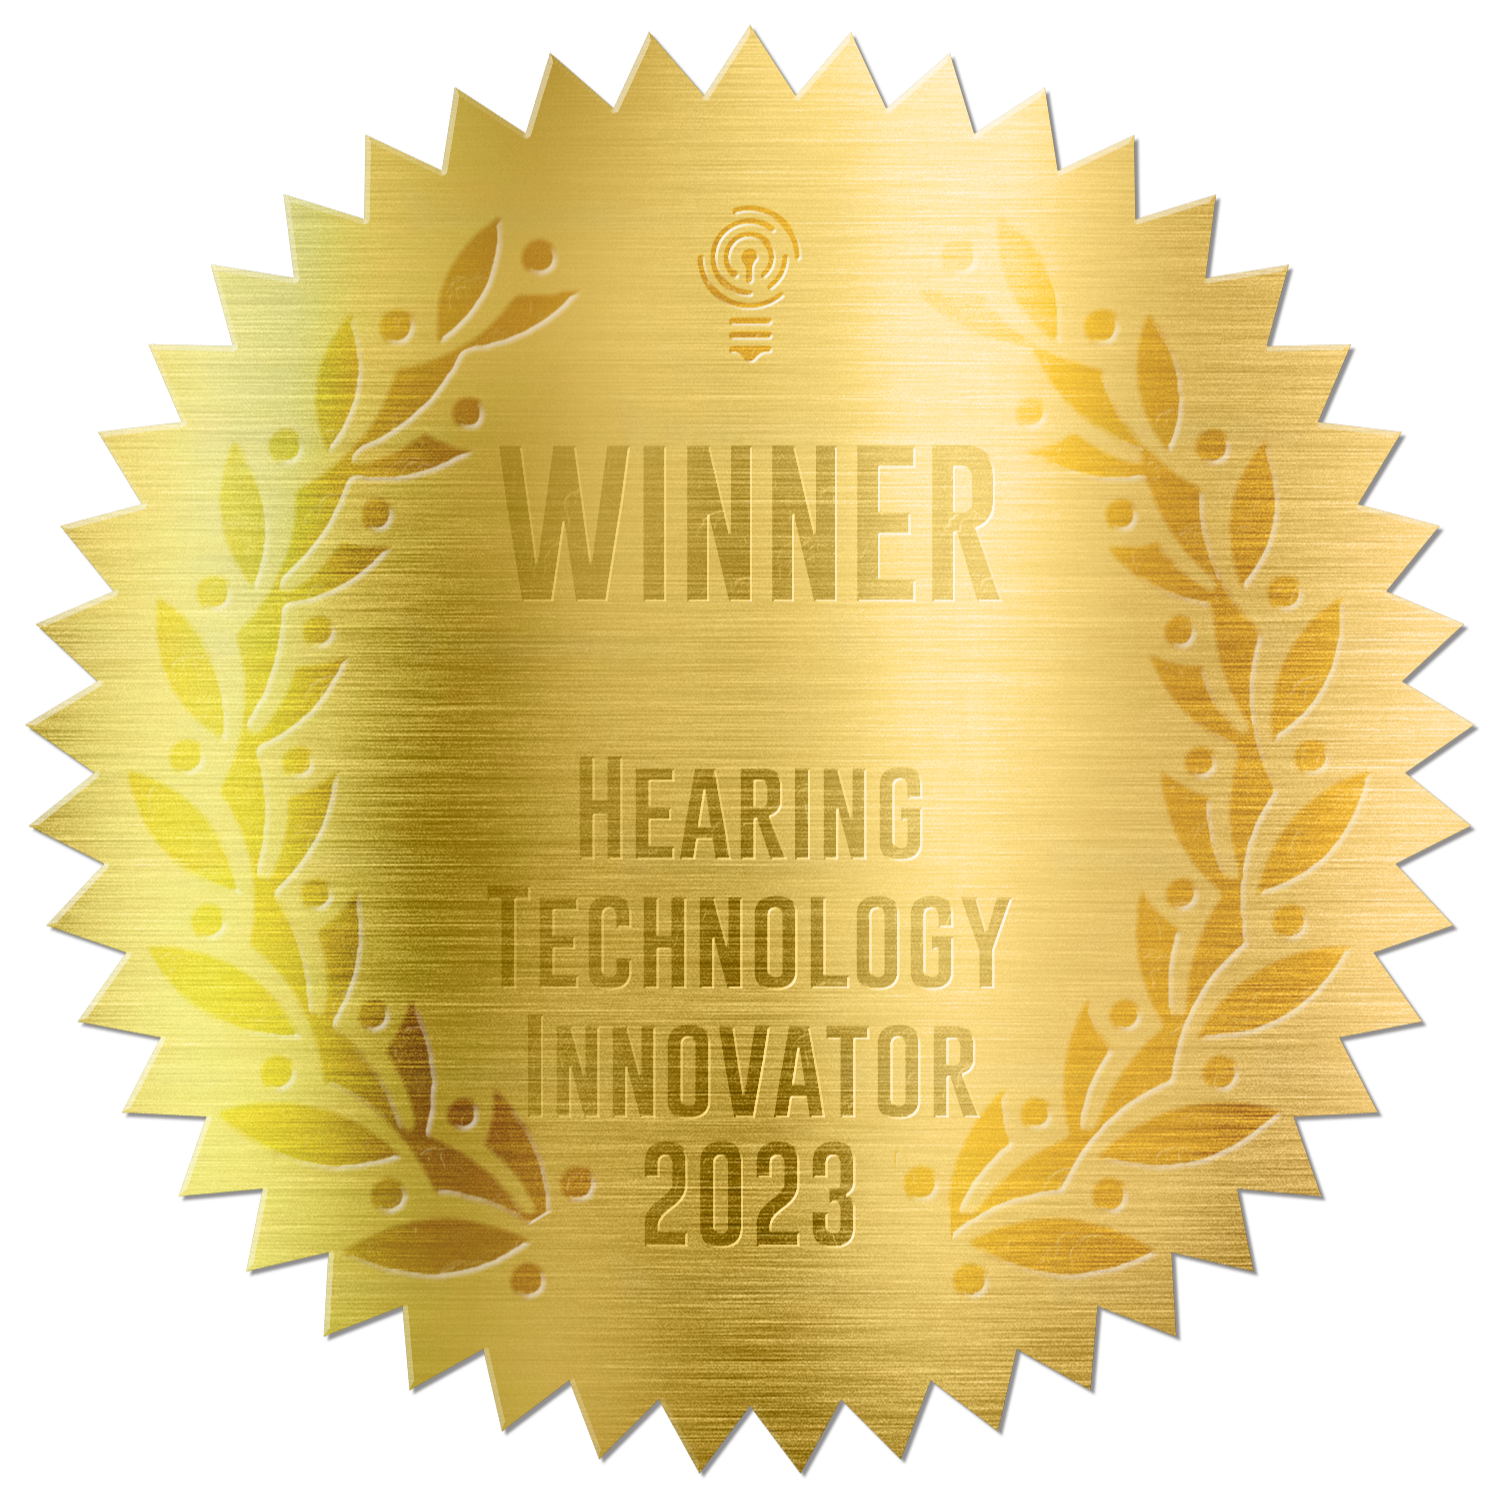 A Hearing Technology Innovator 2023 díj nyertese